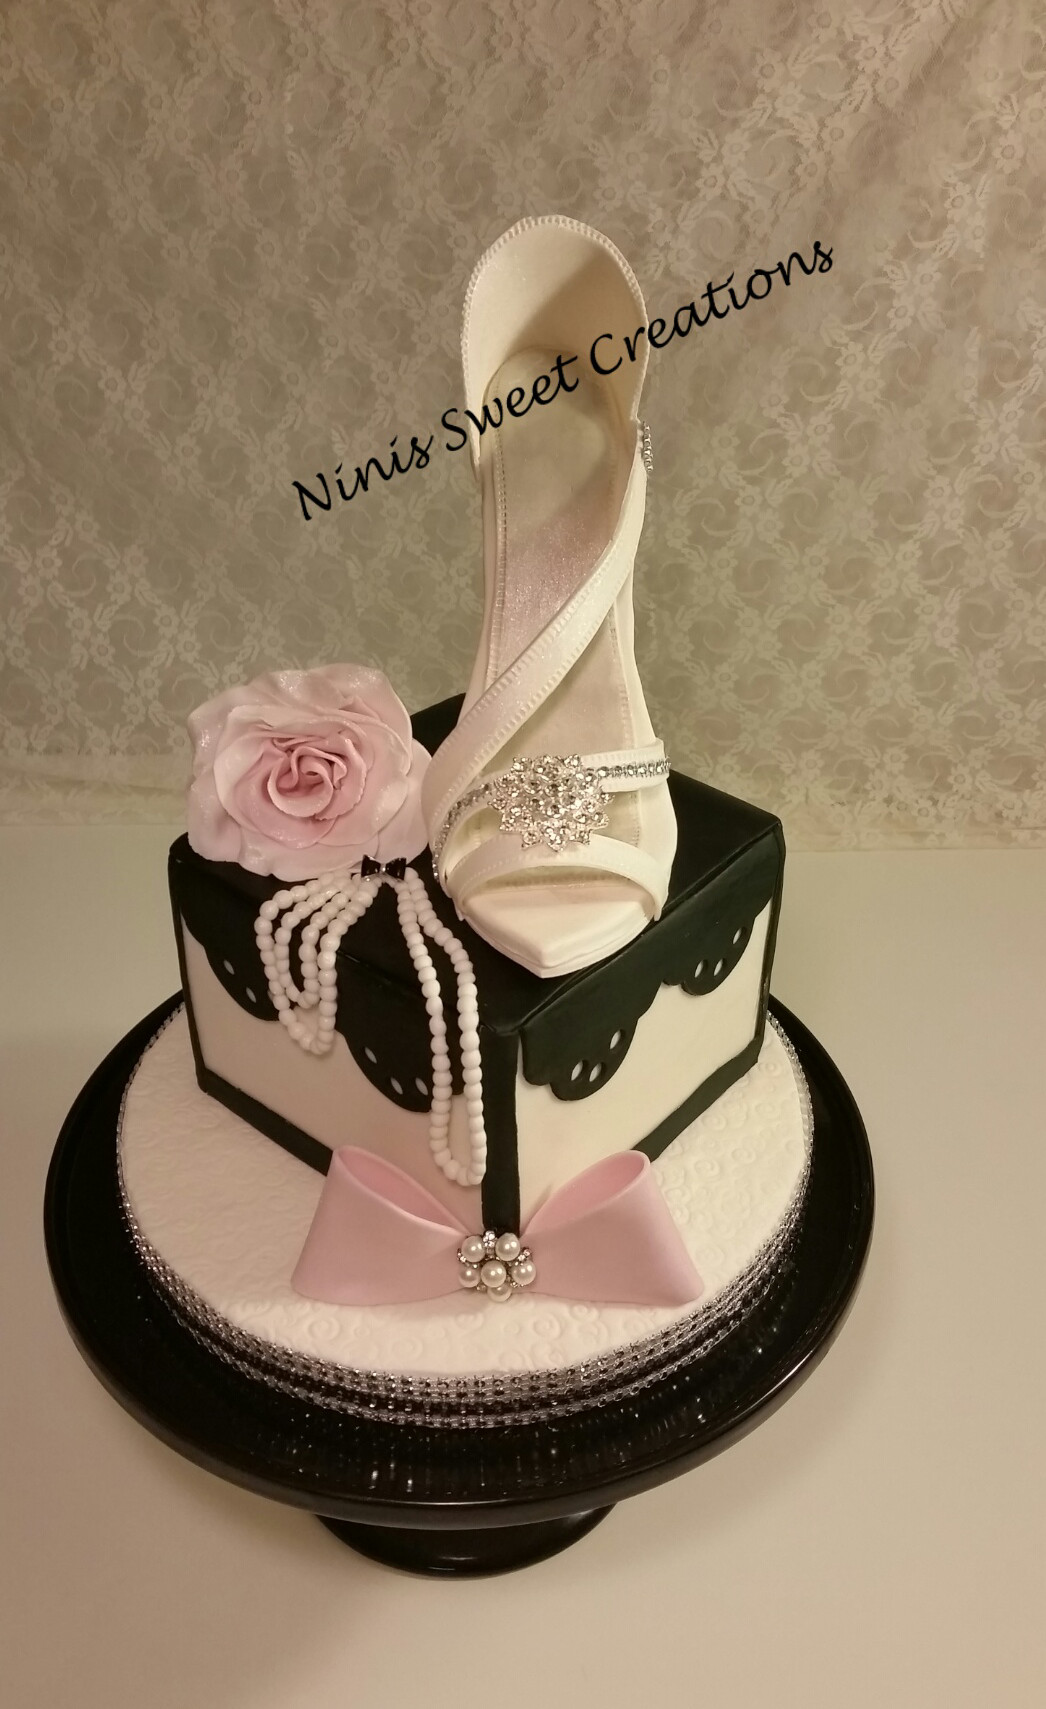 Best ideas about Shoe Birthday Cake
. Save or Pin Elegant White Fondant Shoe Cake Ninis Sweet Creations Now.